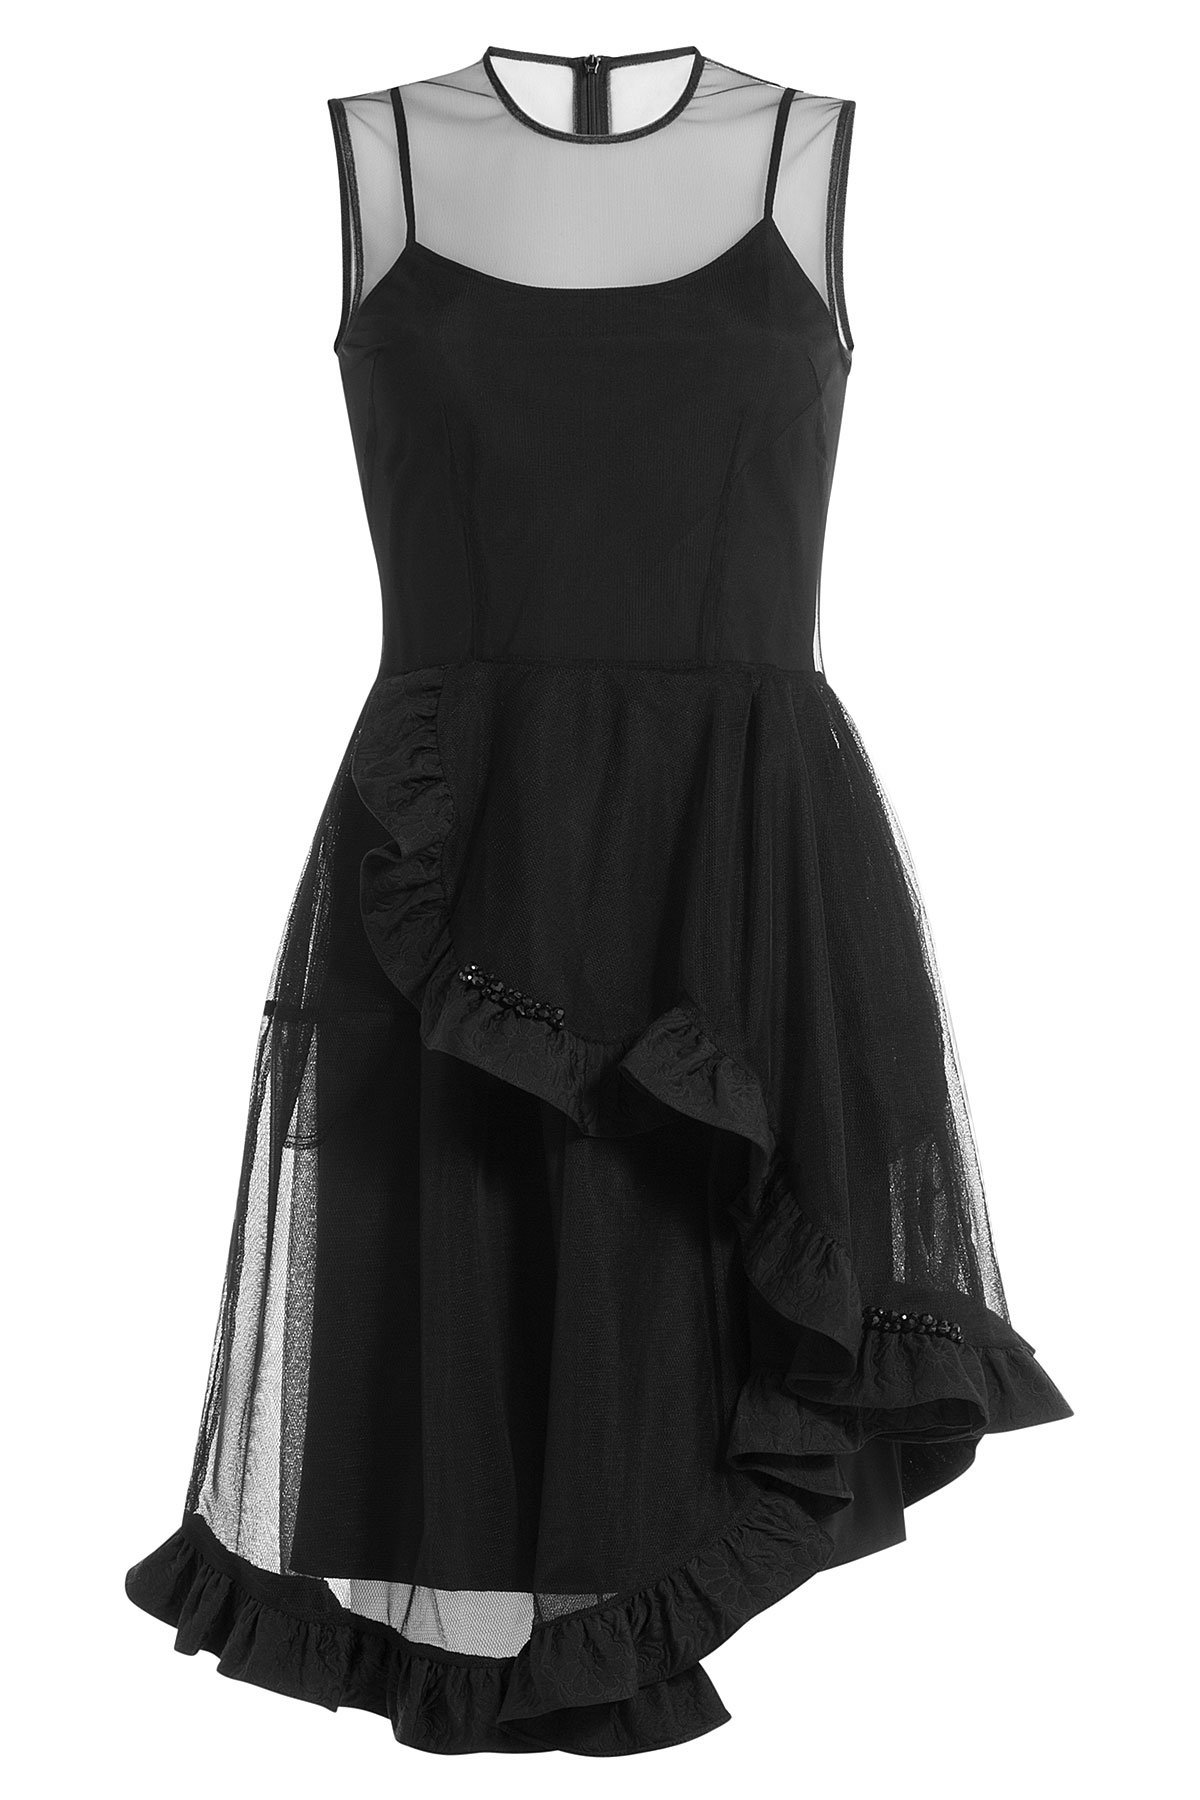 Simone Rocha - Dress with Sheer Ruffled Tulle Overlay